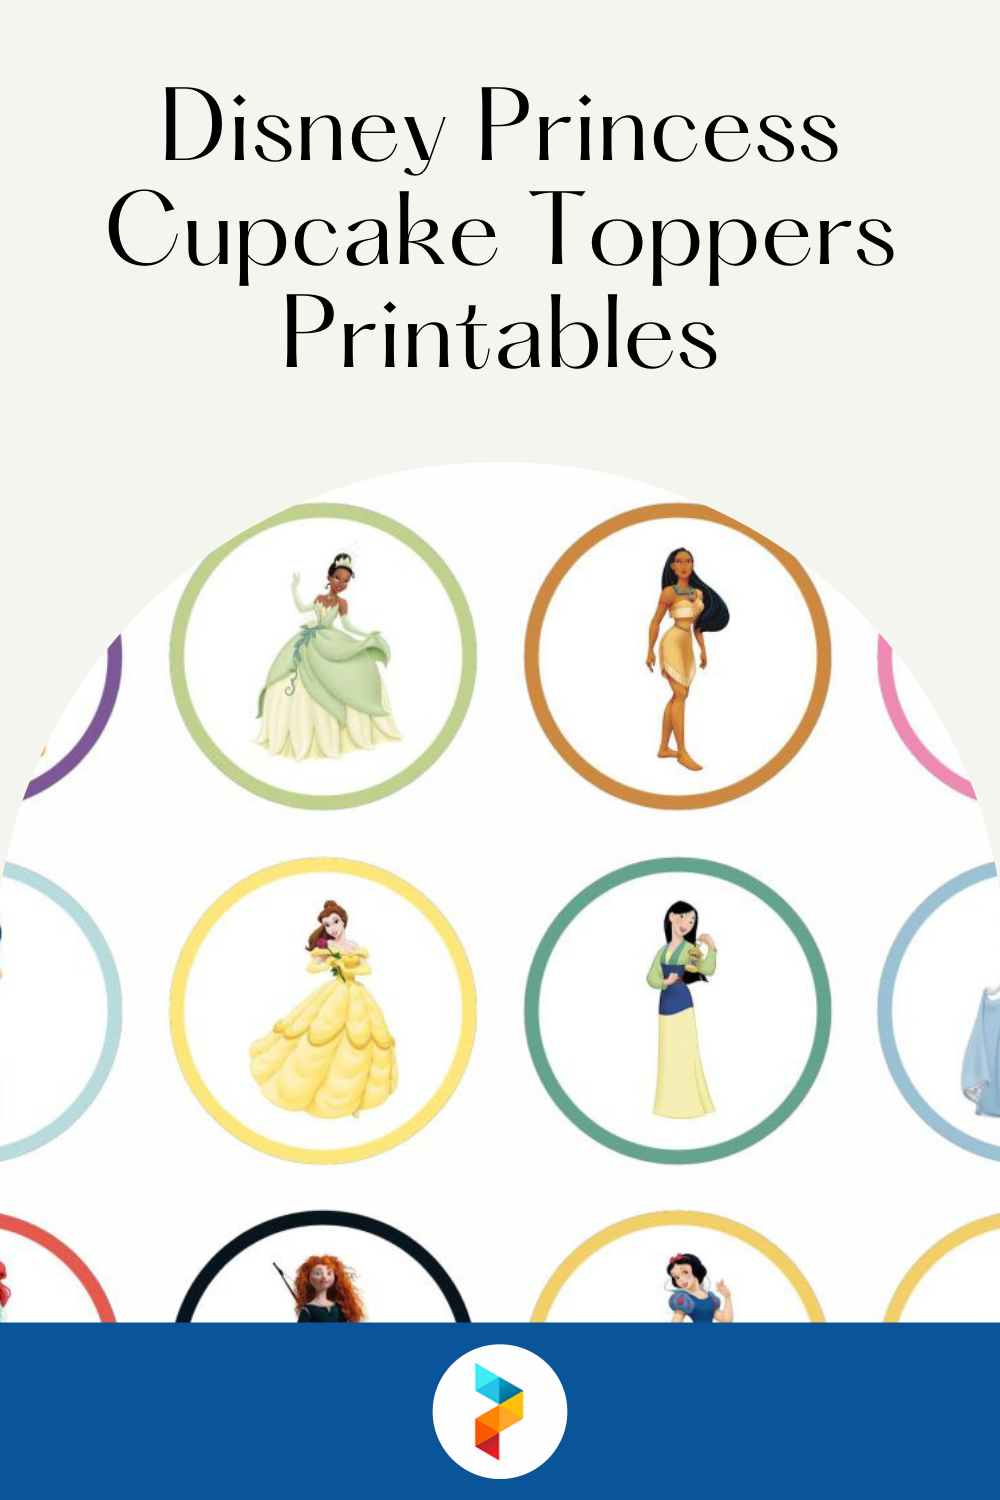 Disney Princess Cupcake Toppers Printables